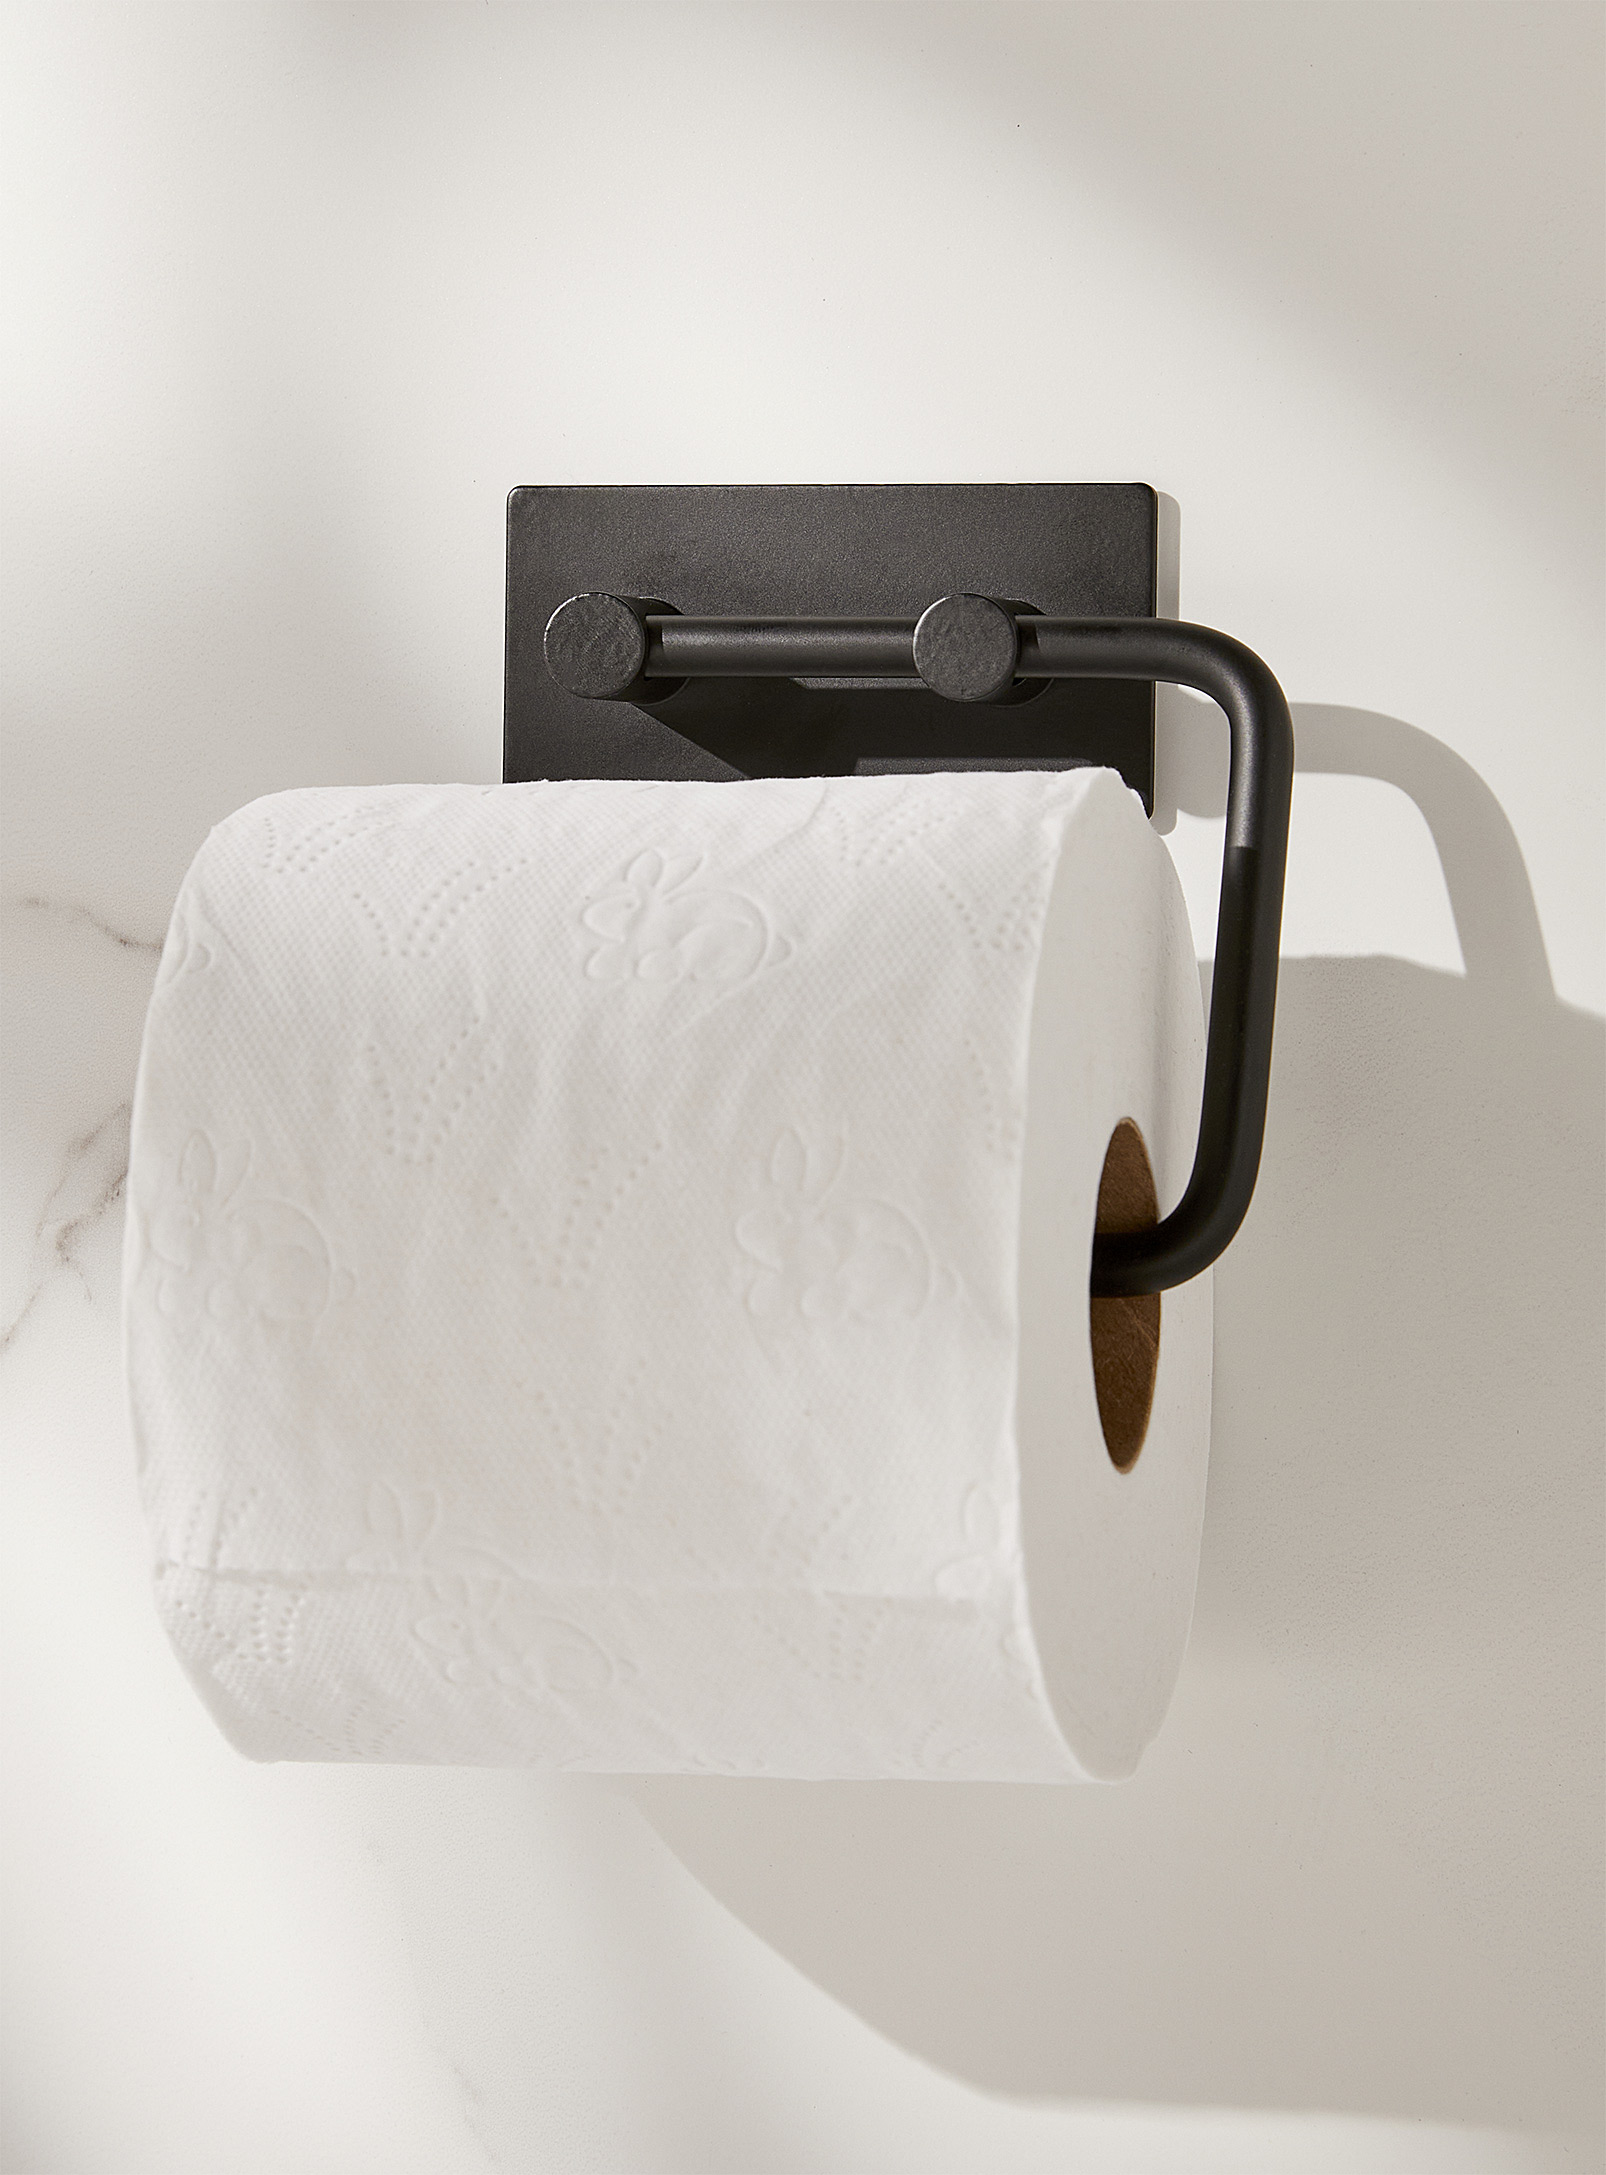 Simons Maison - Black adhesive toilet paper holder